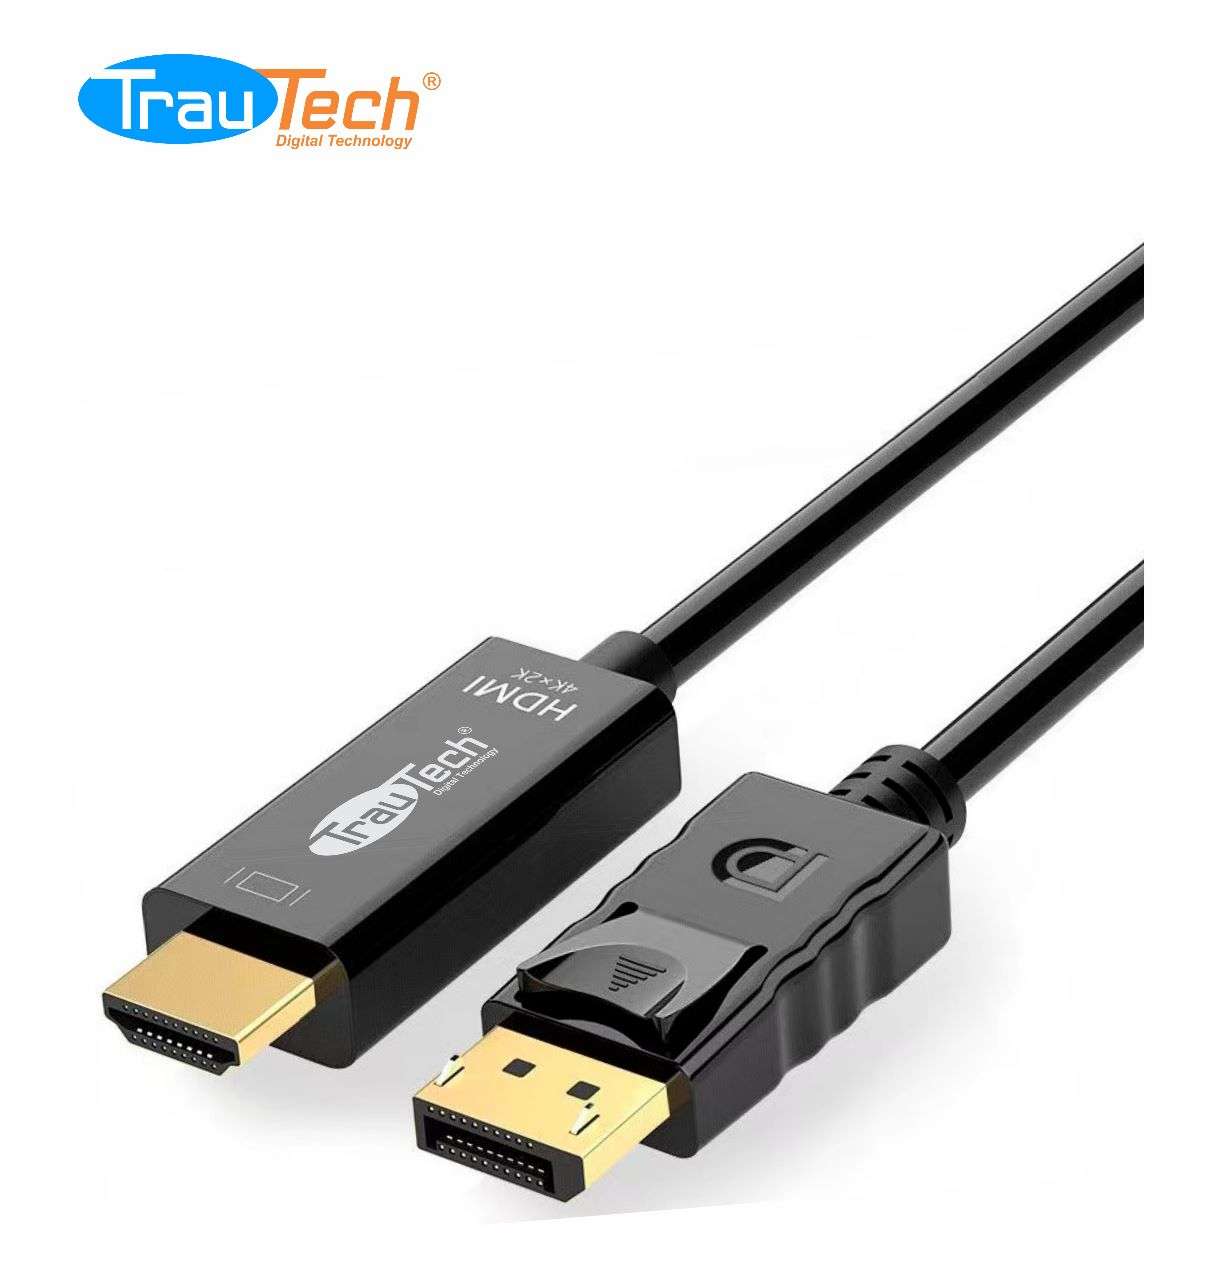 CABLE USB 2.0 A MINI USB 5 PINES DE 1.80 METROS TRAUTECH – Compukaed